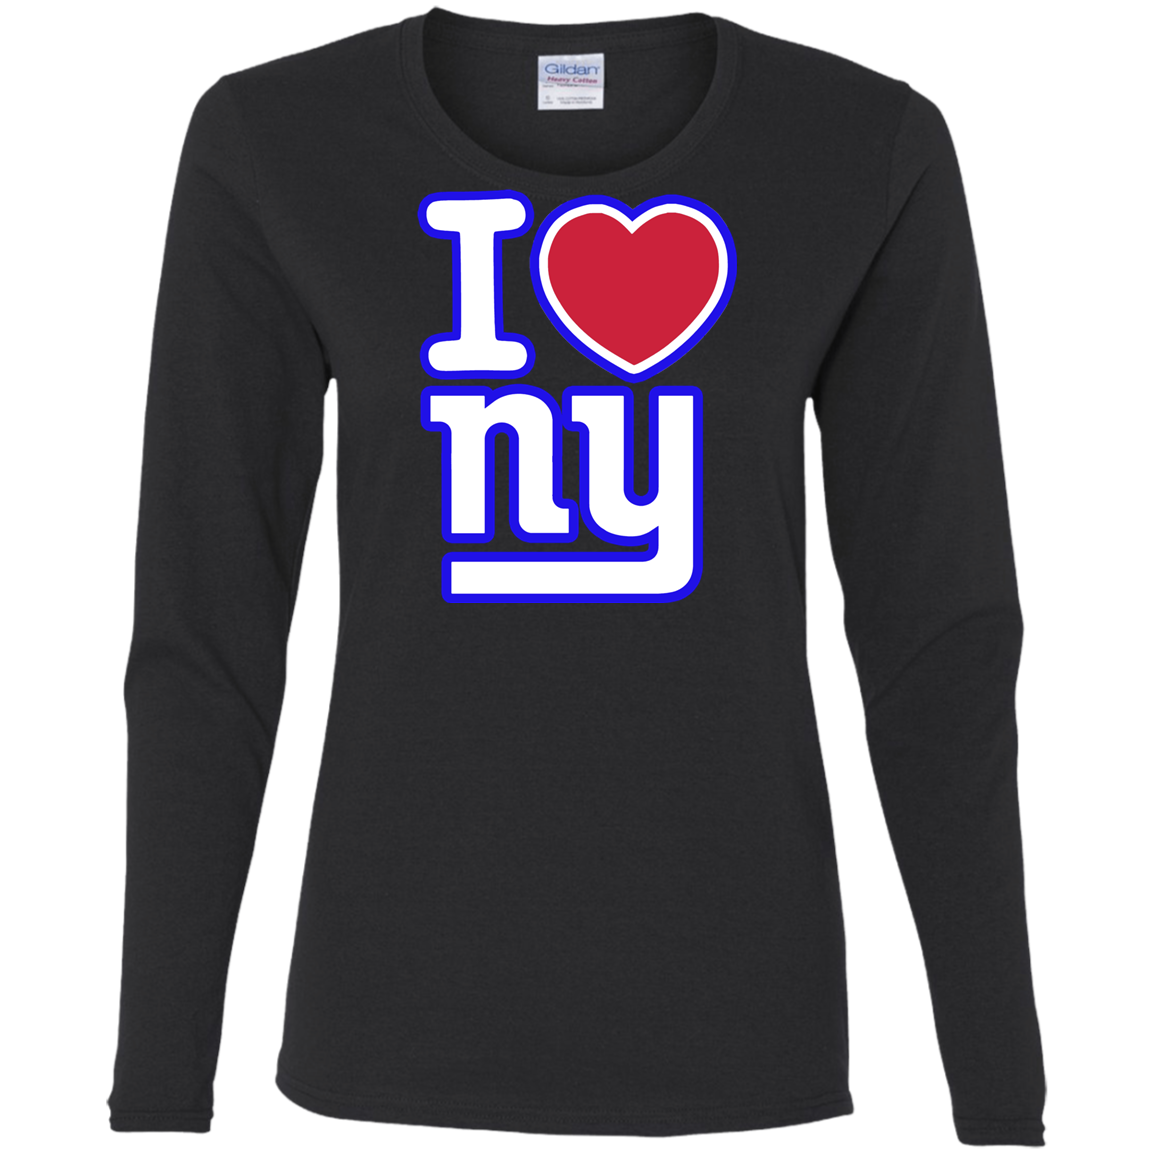 ArtichokeUSA Custom Design. I heart New York Giants. NY Giants Football Fan Art. Ladies' Cotton LS T-Shirt